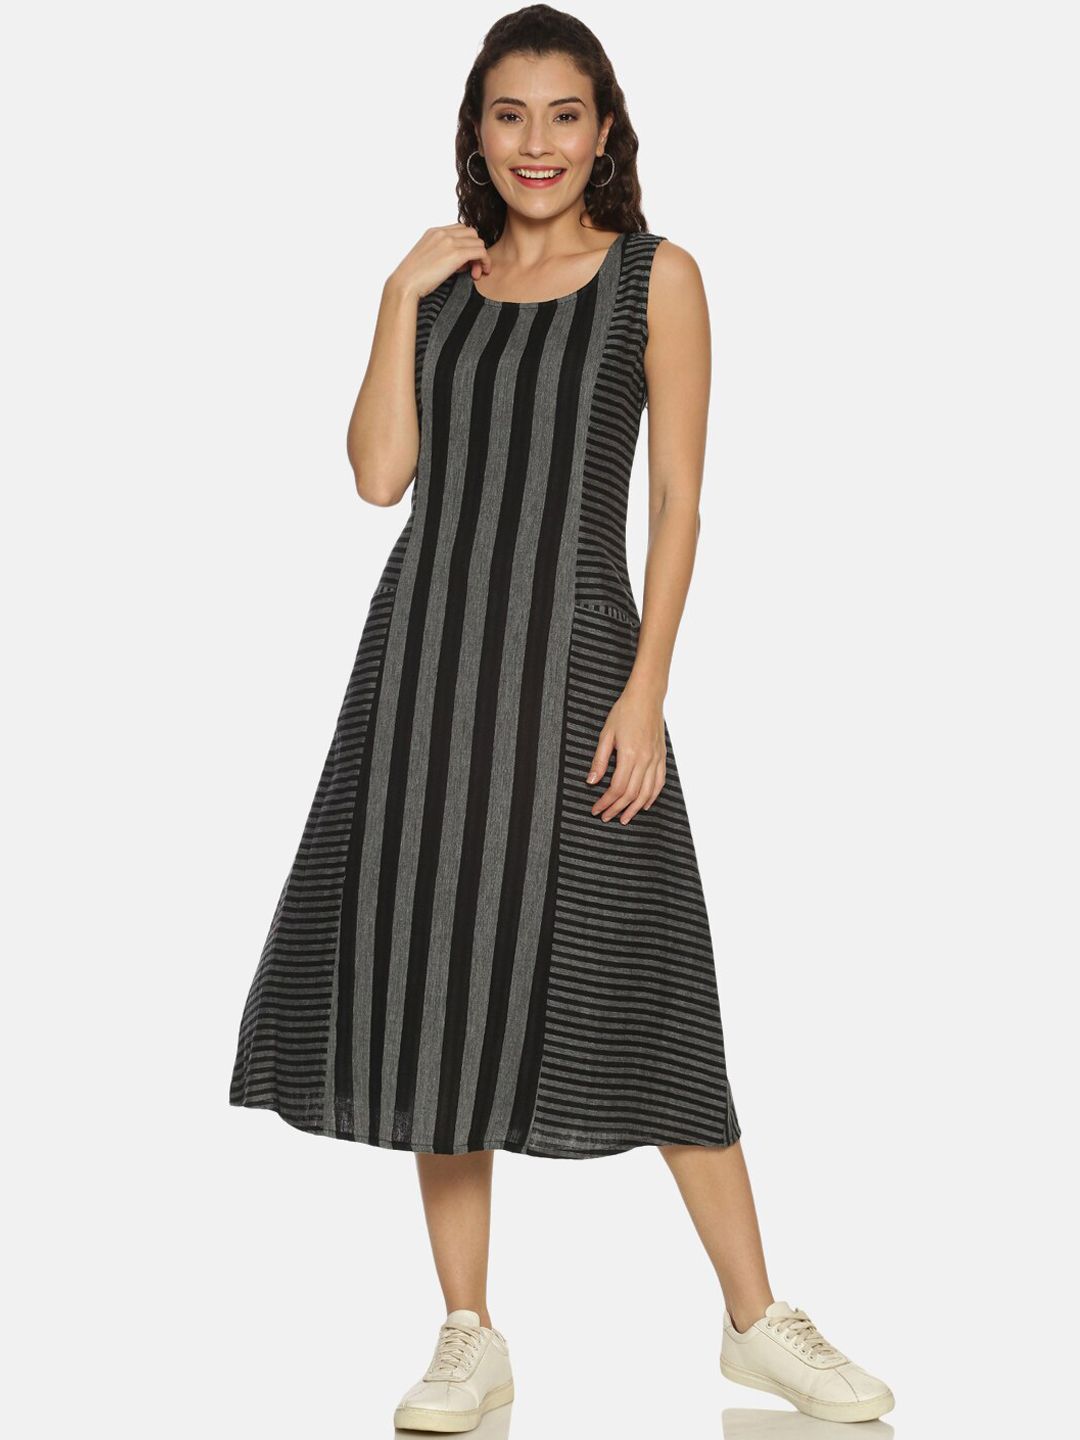 Saffron Threads Women Black Striped A-Line Dress Price in India